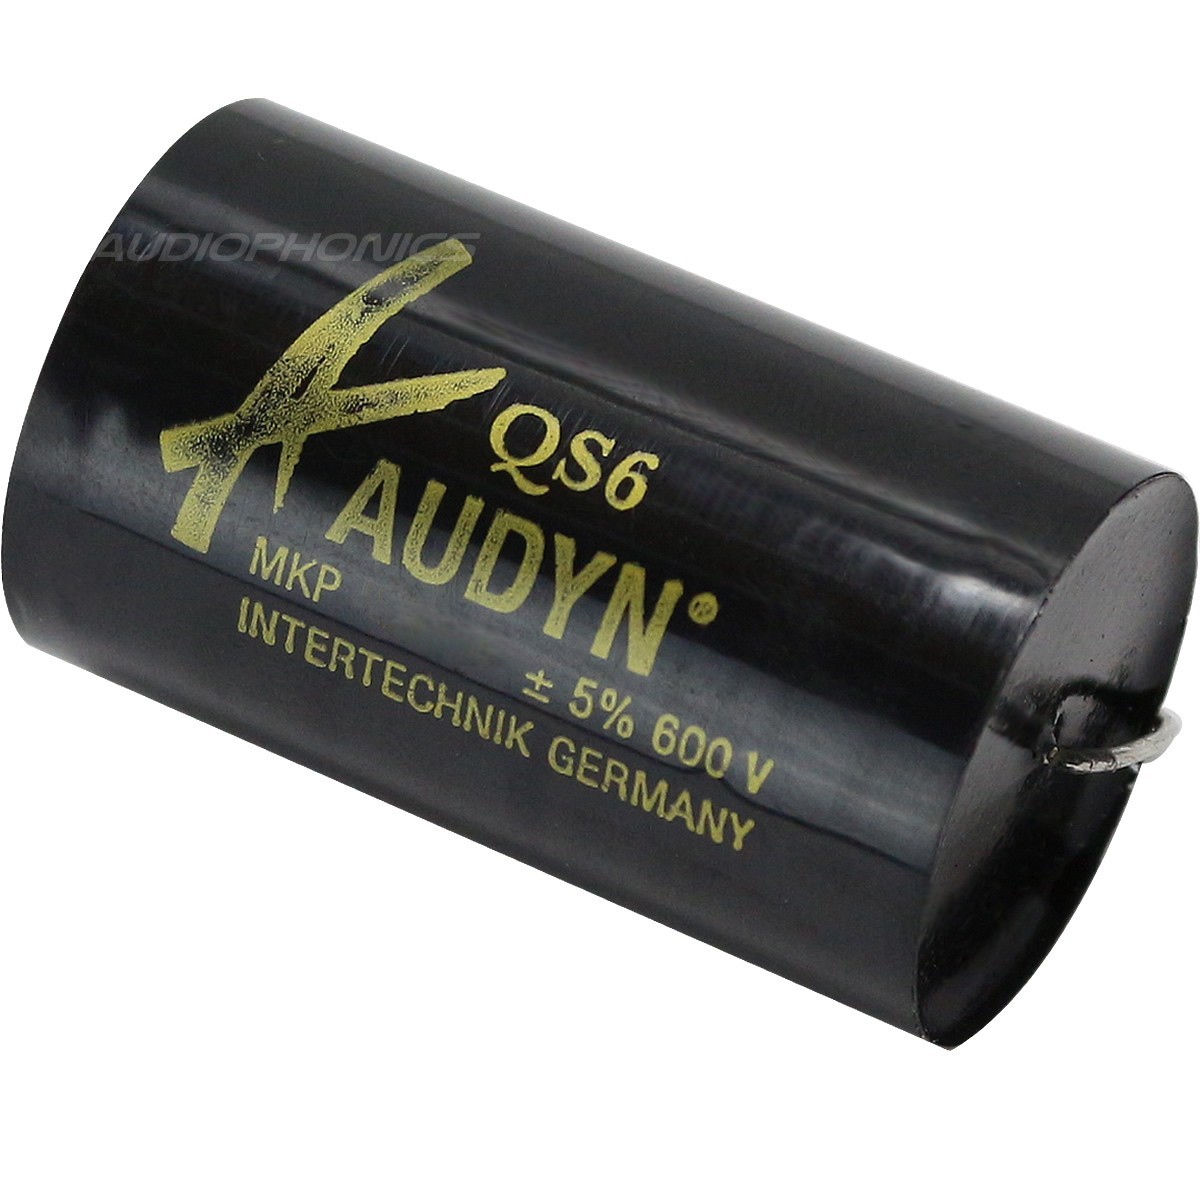 AUDYN CAP QS6 Condensateur MKP 600V 0.33µF